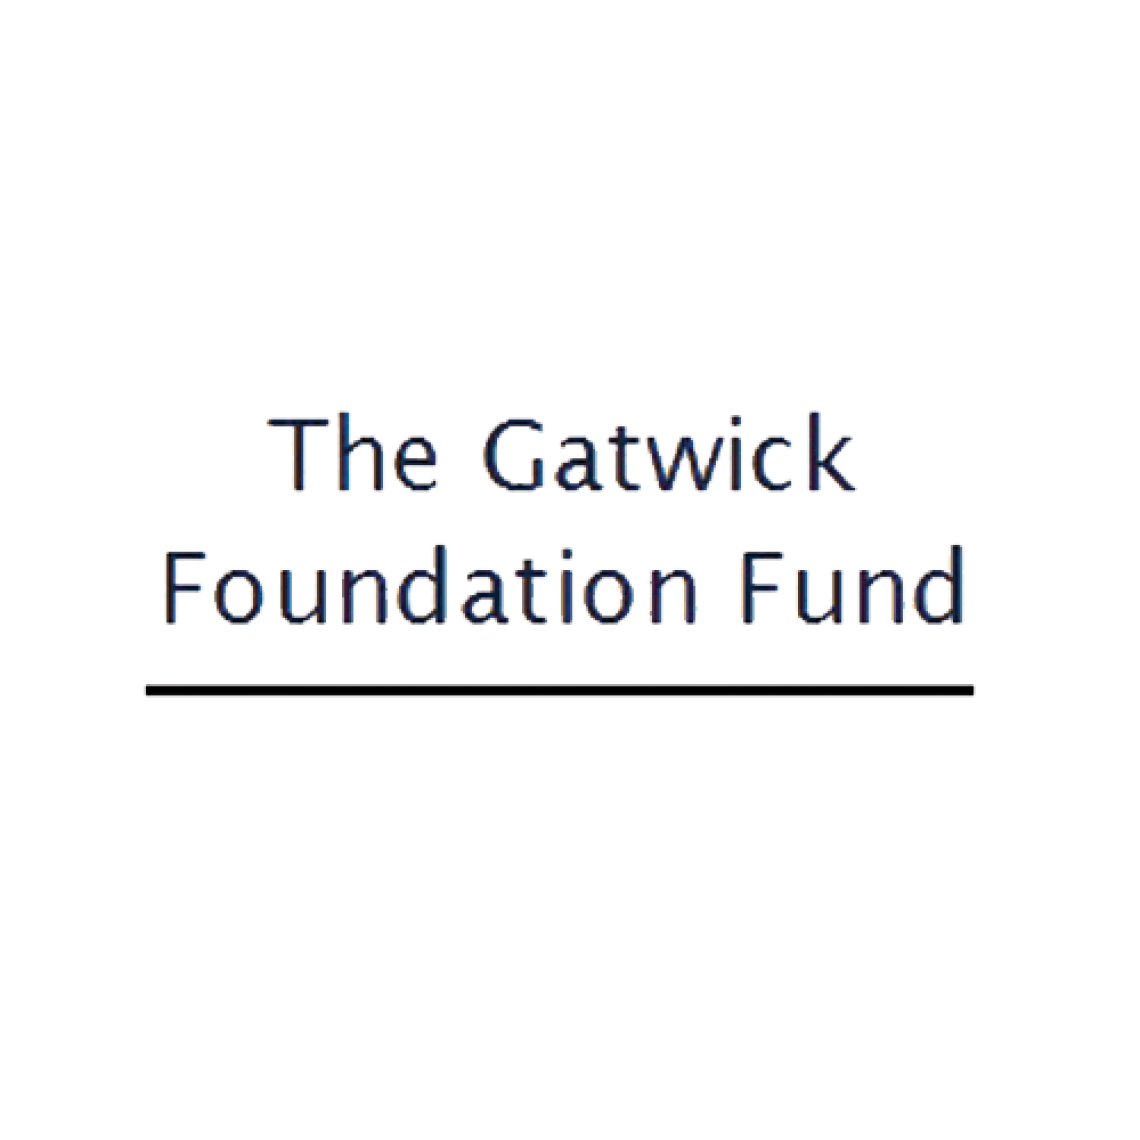 The Gatwick Foundation Fund logo